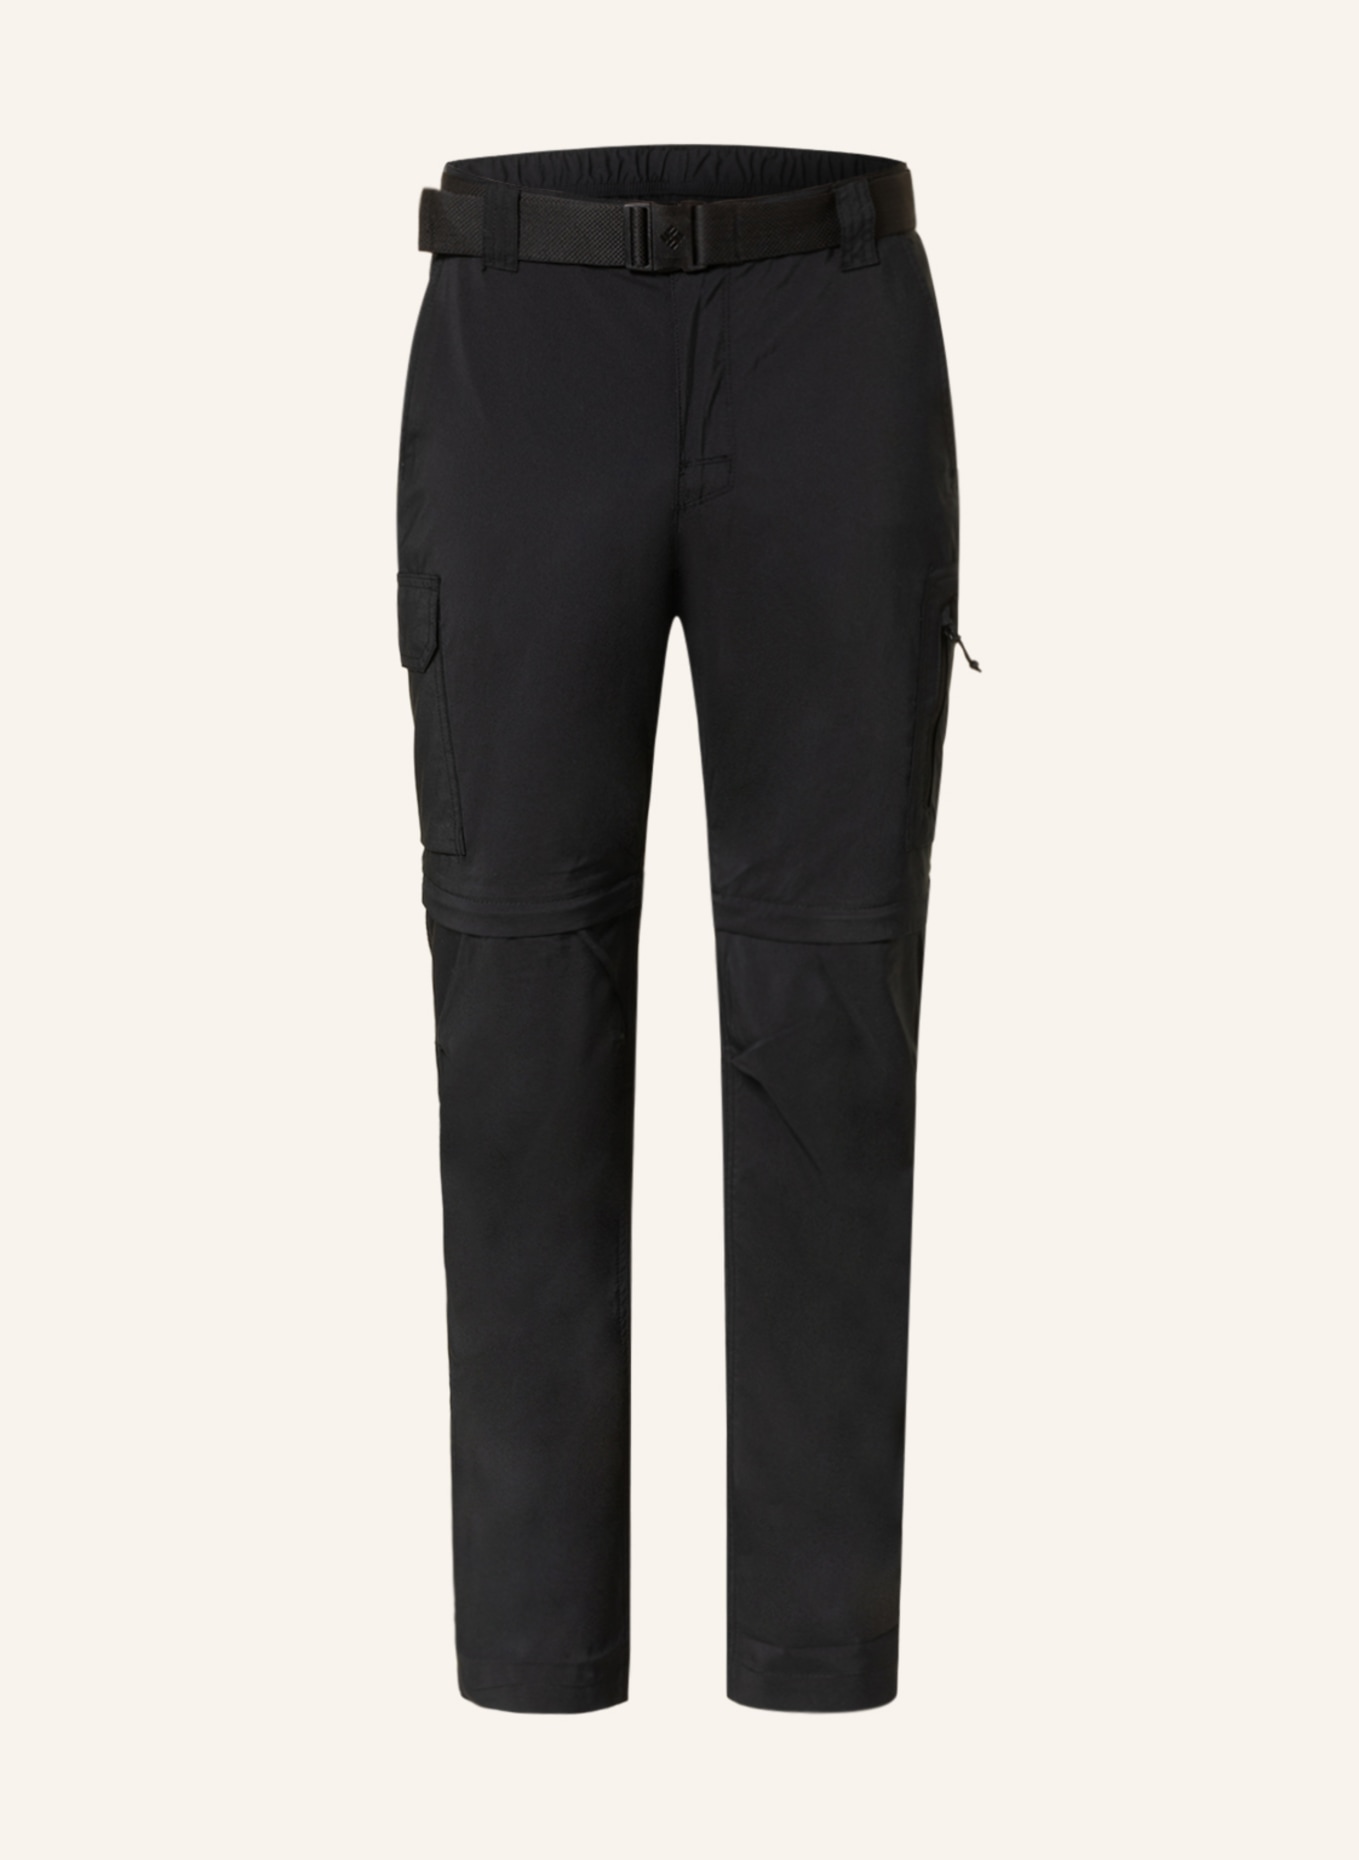 Columbia Pants  Buy Columbia Men Grey Na Silver Ridge Convertible Pant  Set of 2Online  Nykaa Fashion